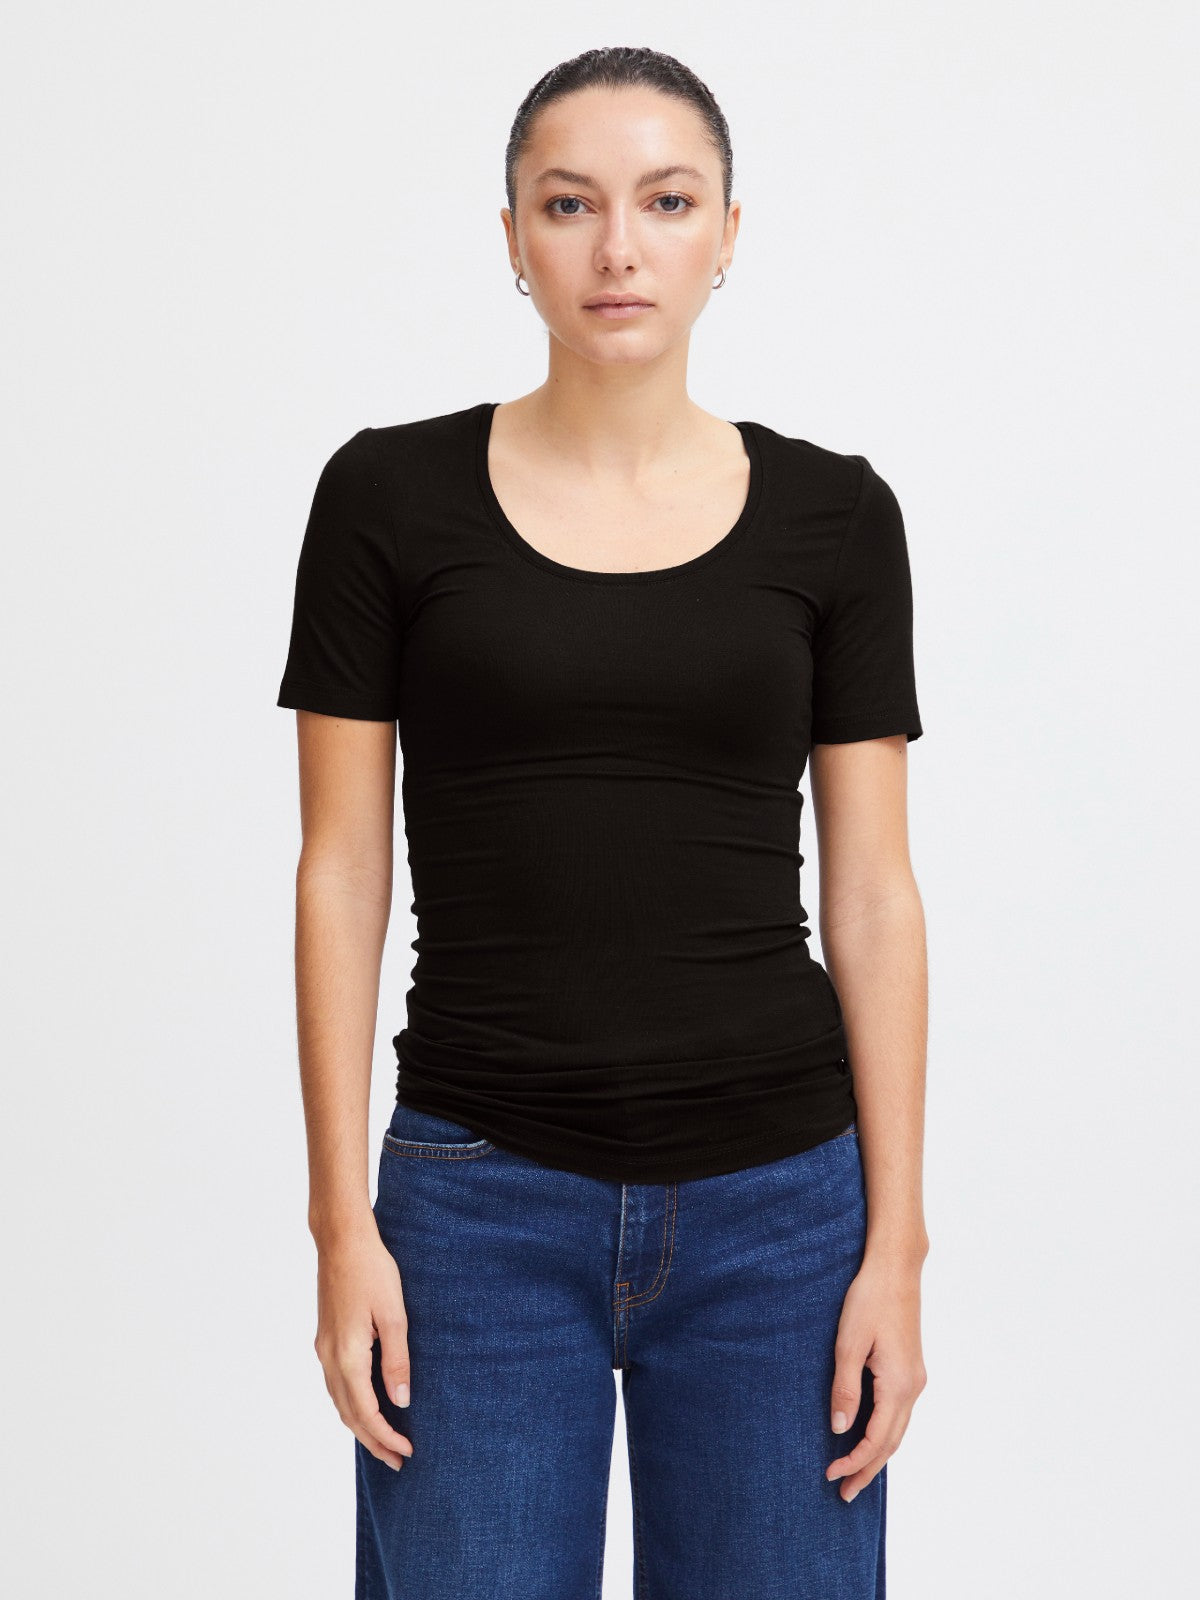 Zola Black T-Shirt